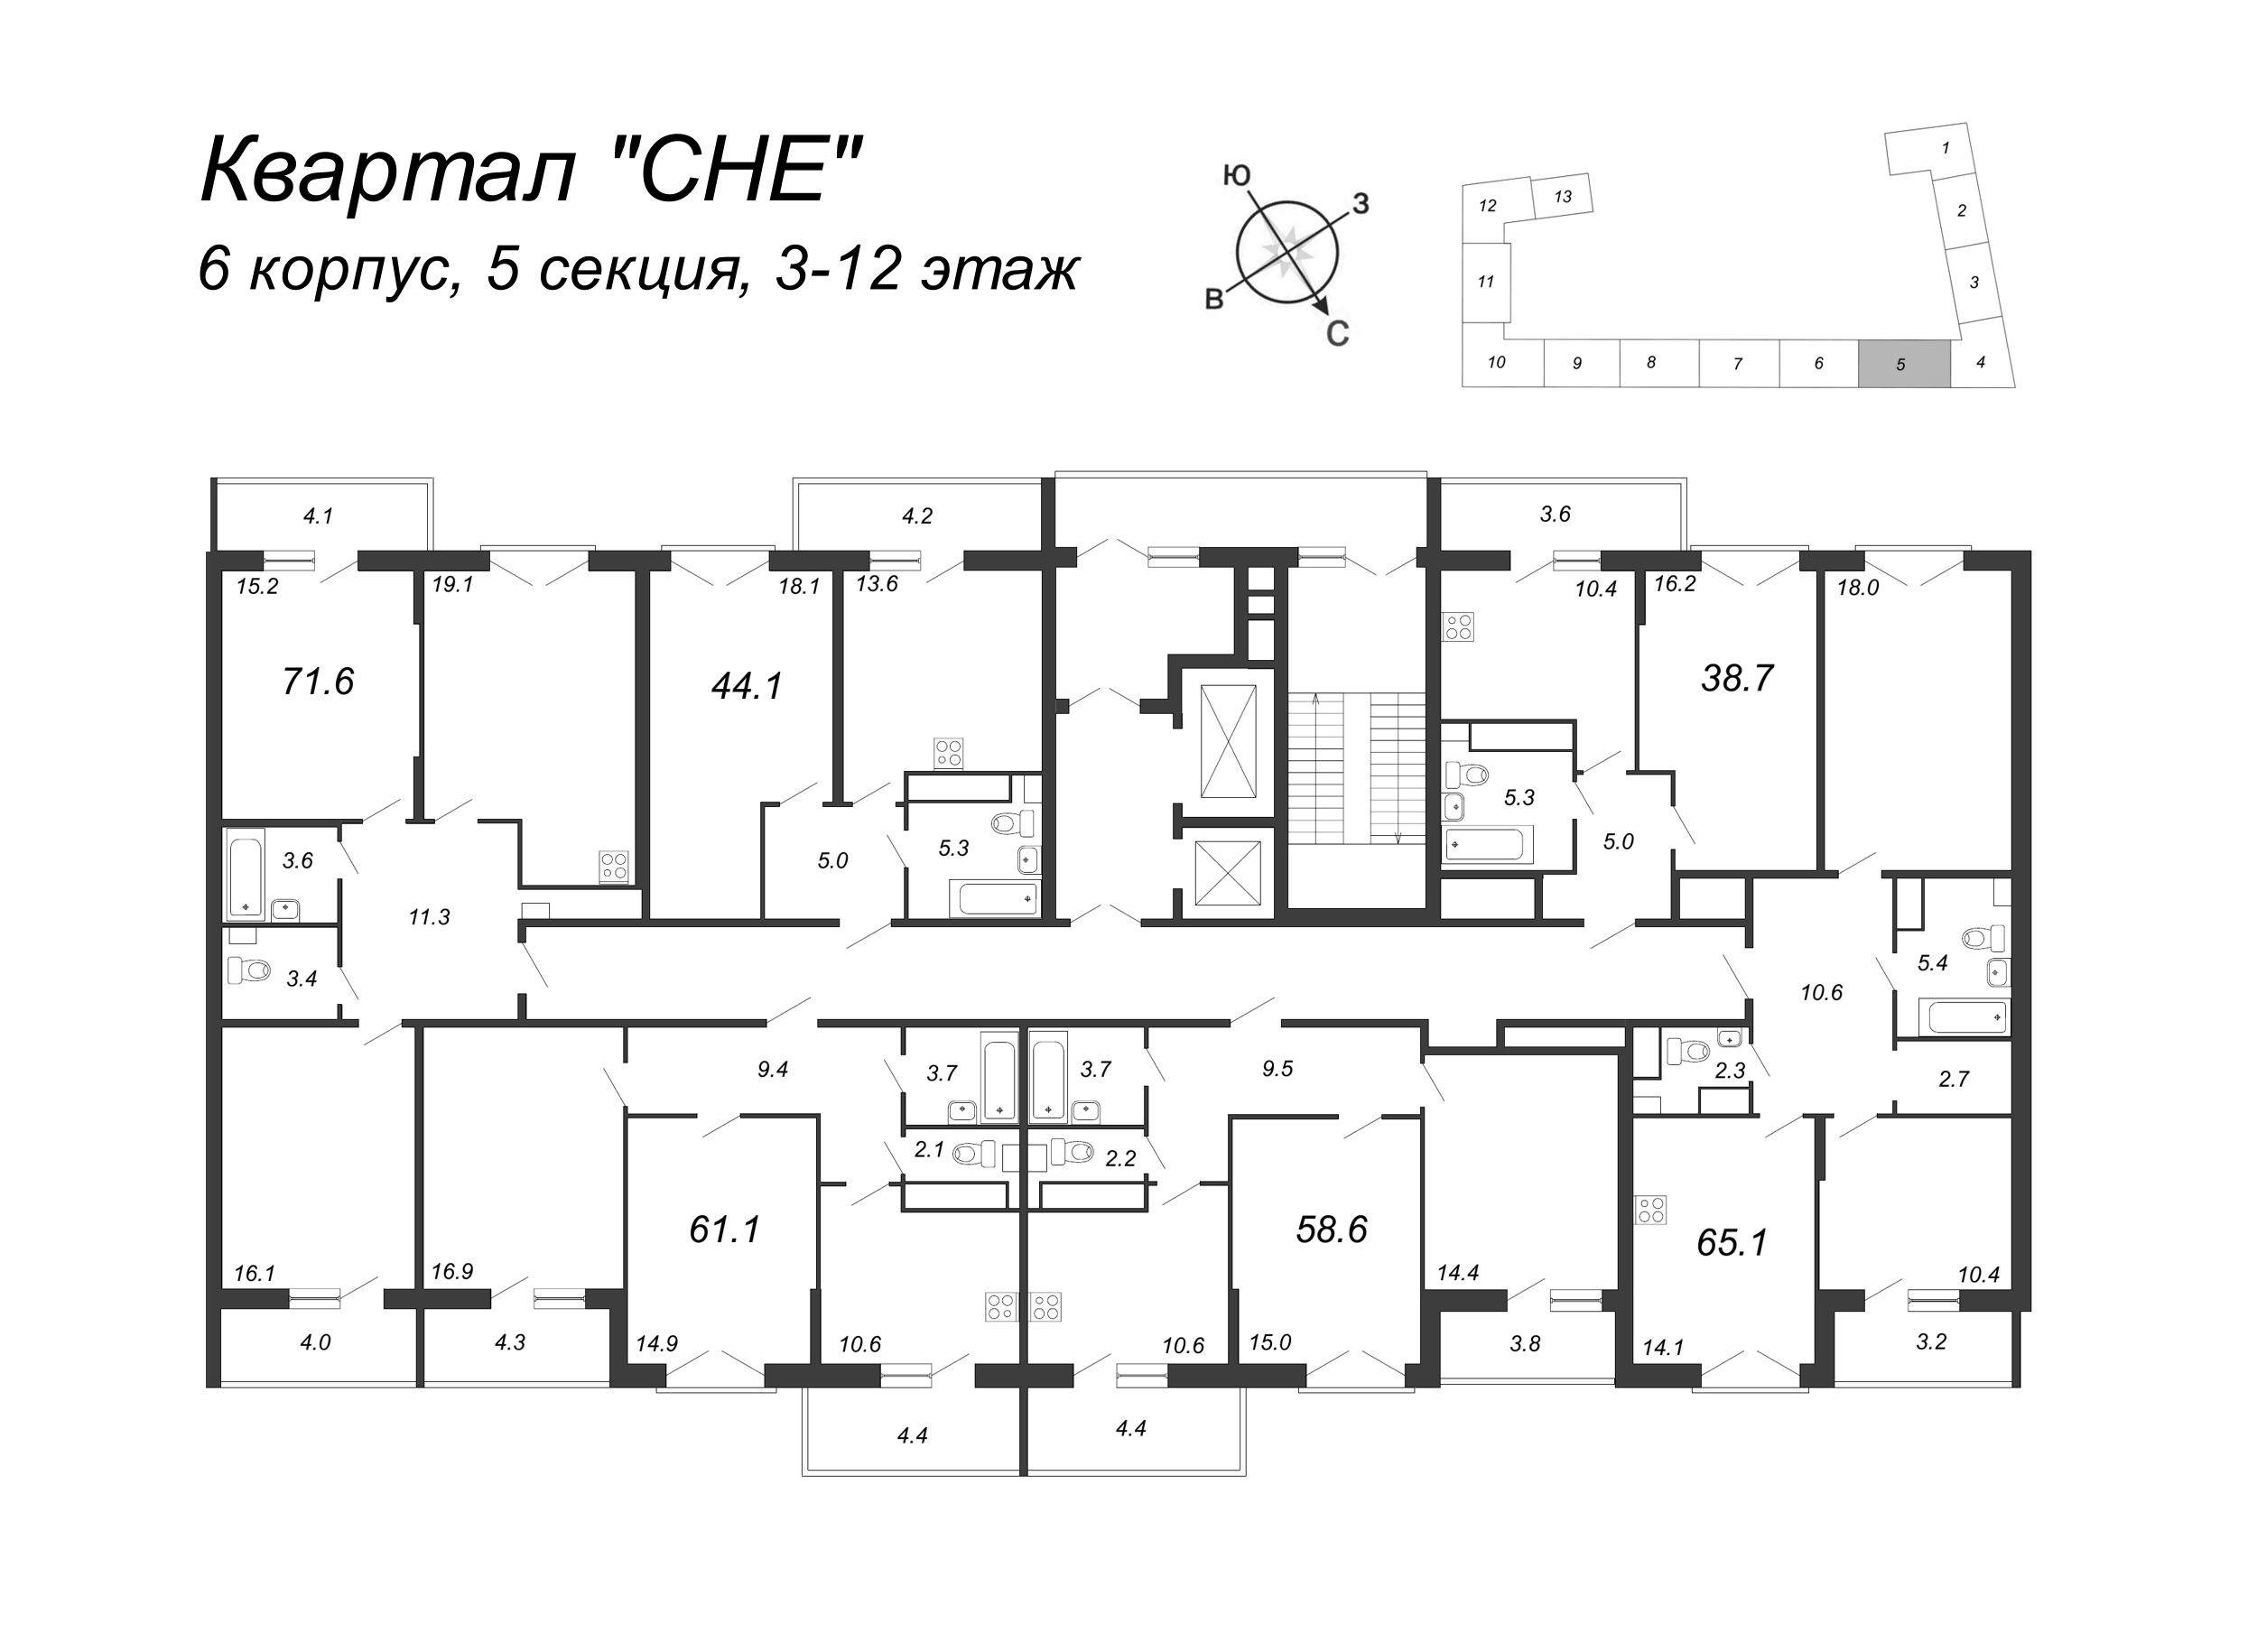 2-комнатная квартира, 62.1 м² в ЖК "Квартал Che" - планировка этажа